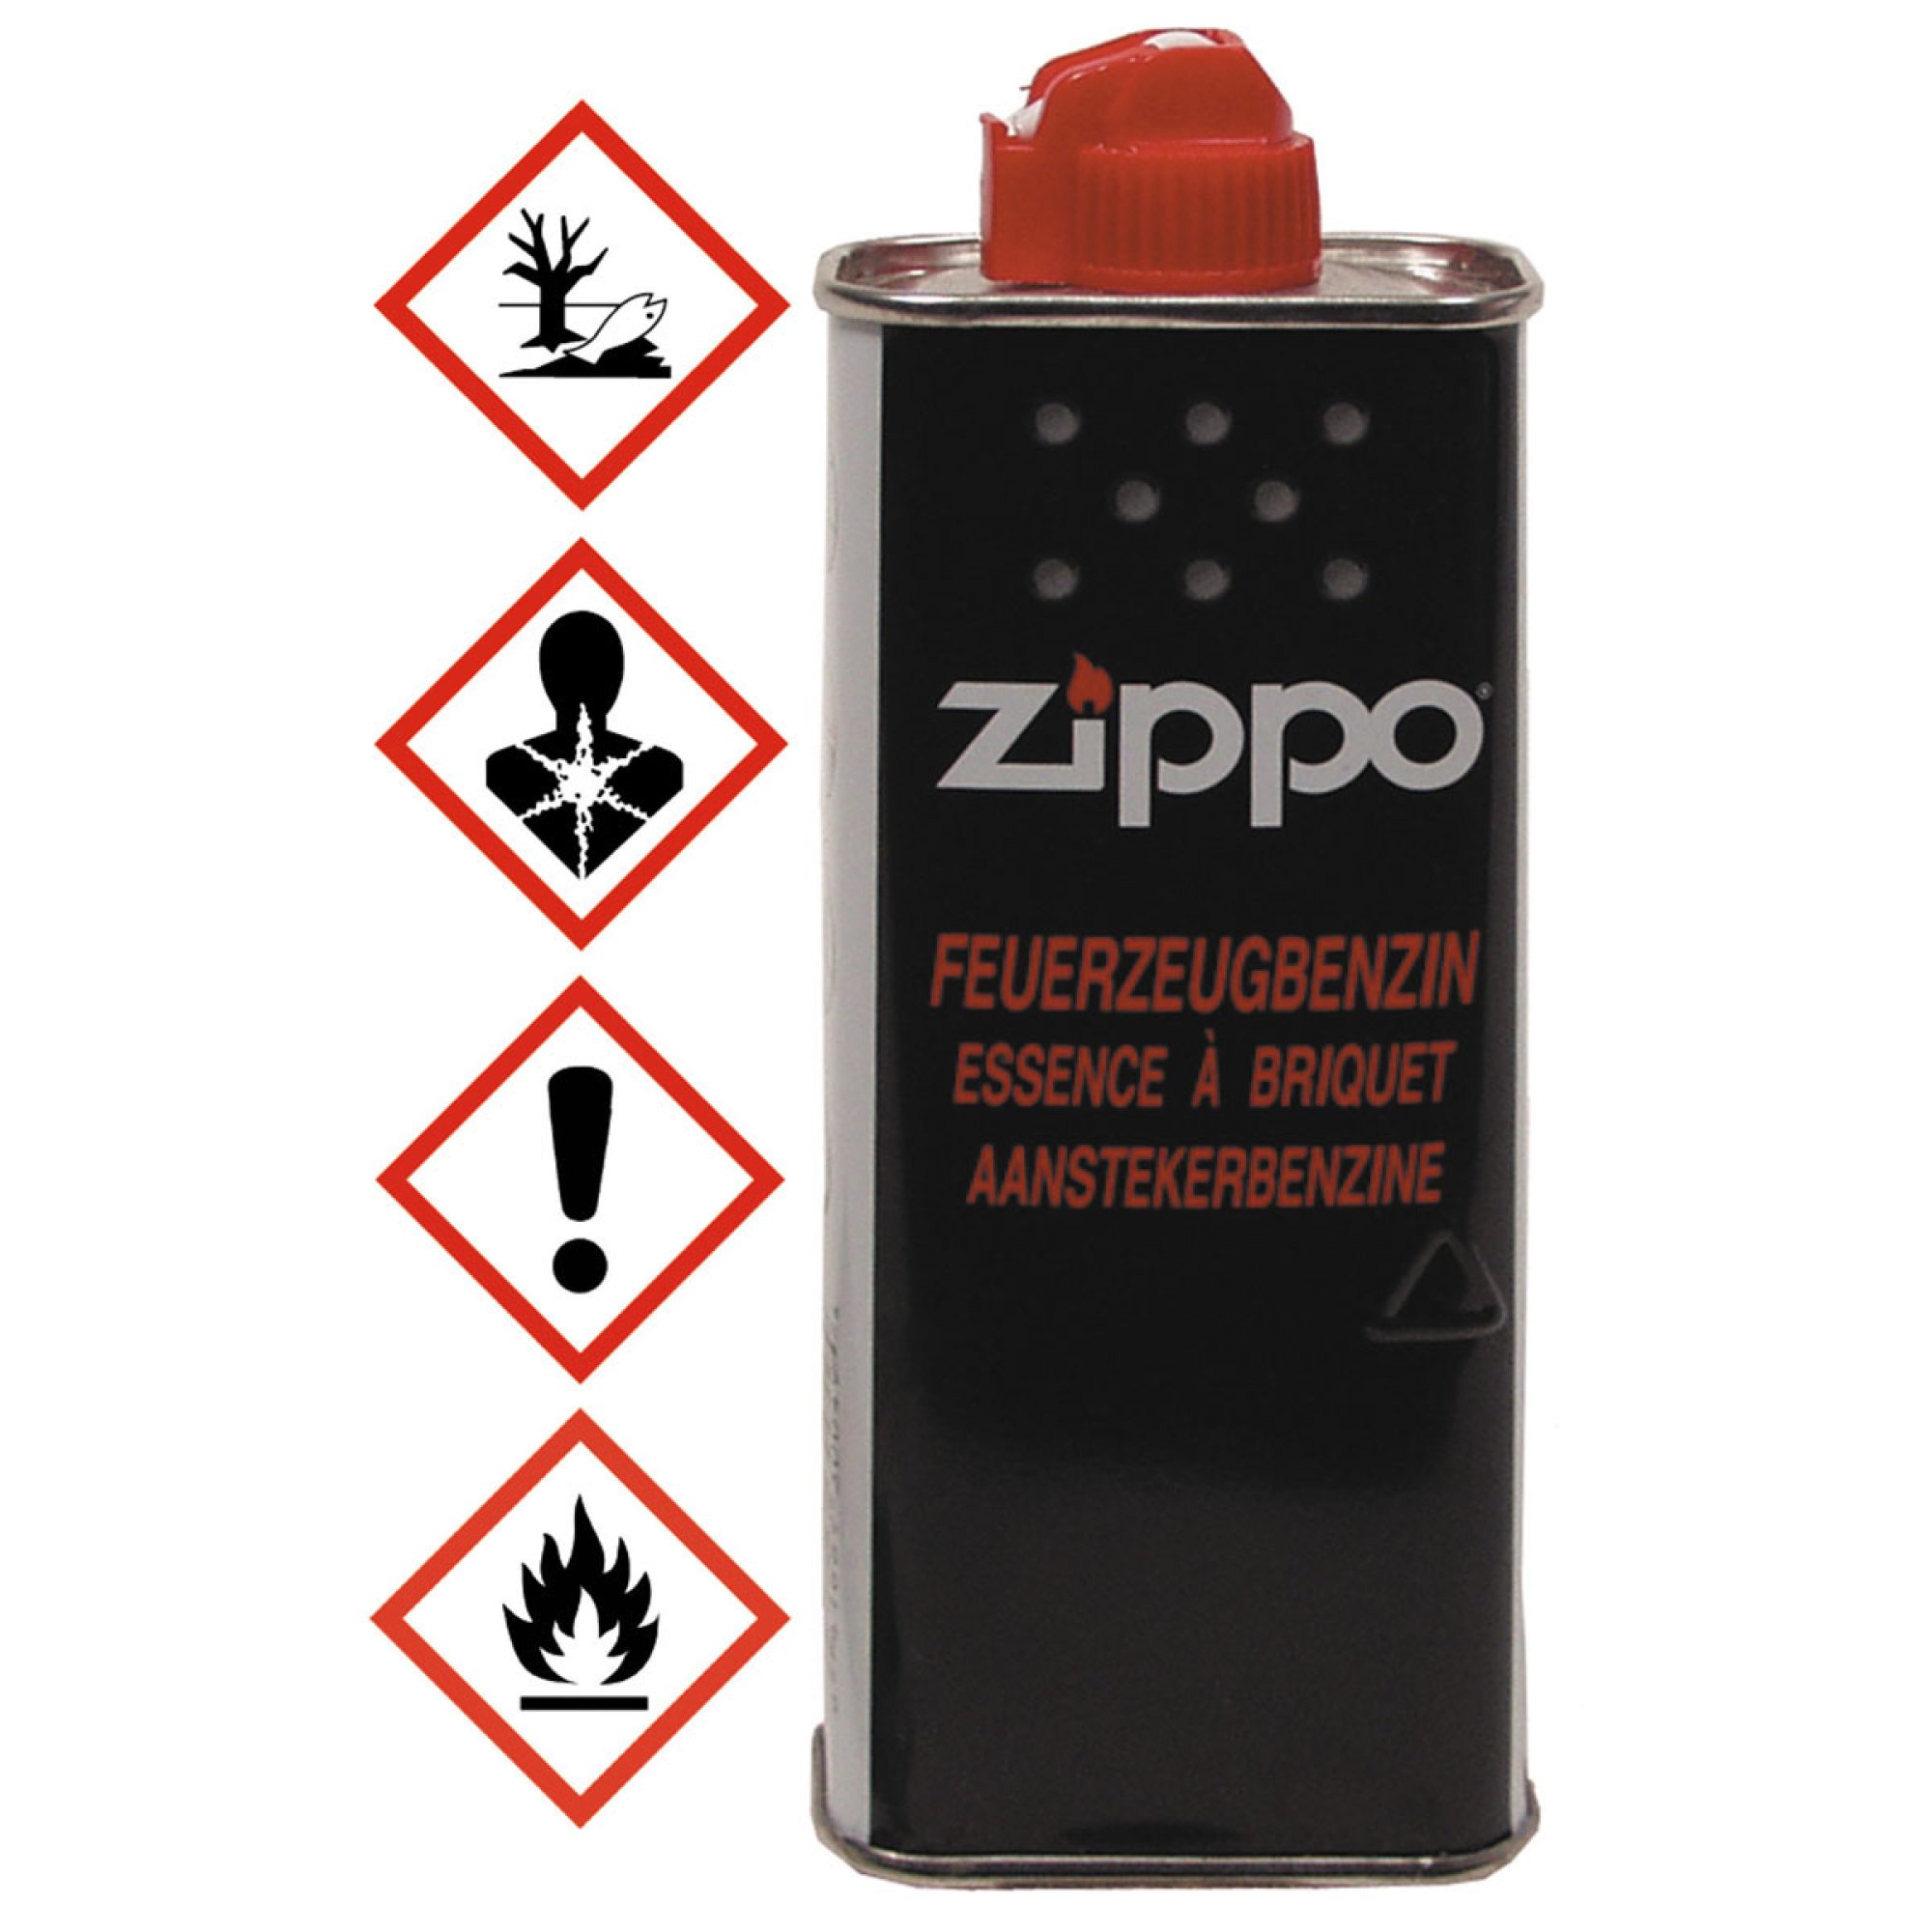 Zippo-Feuerzeugbenzin, 125 ml